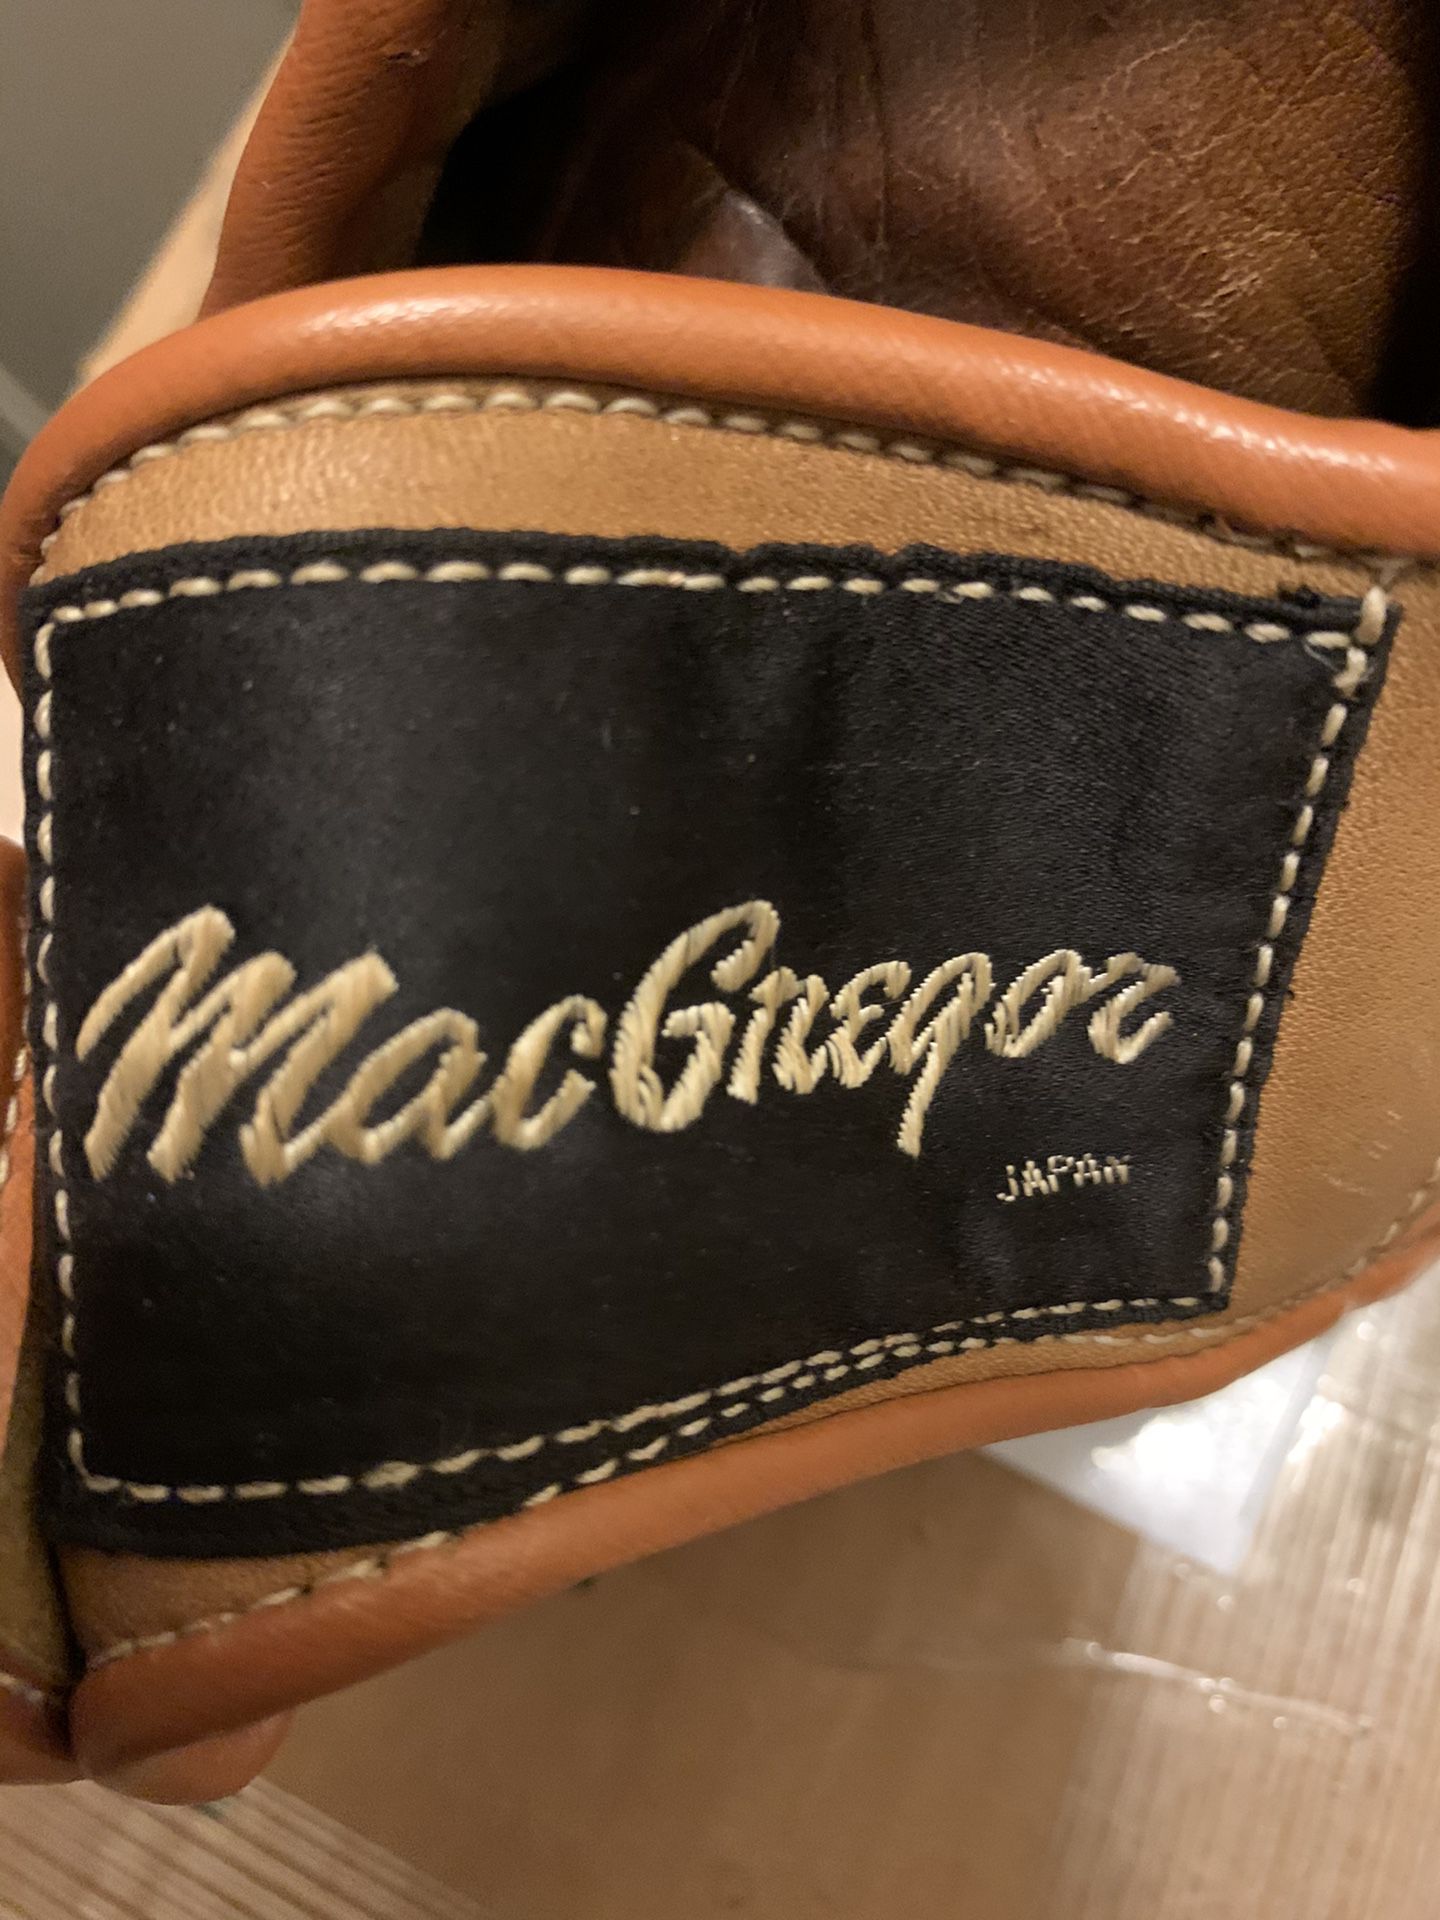 MacGregor Baseball Glove LHT 861 Rod Carew